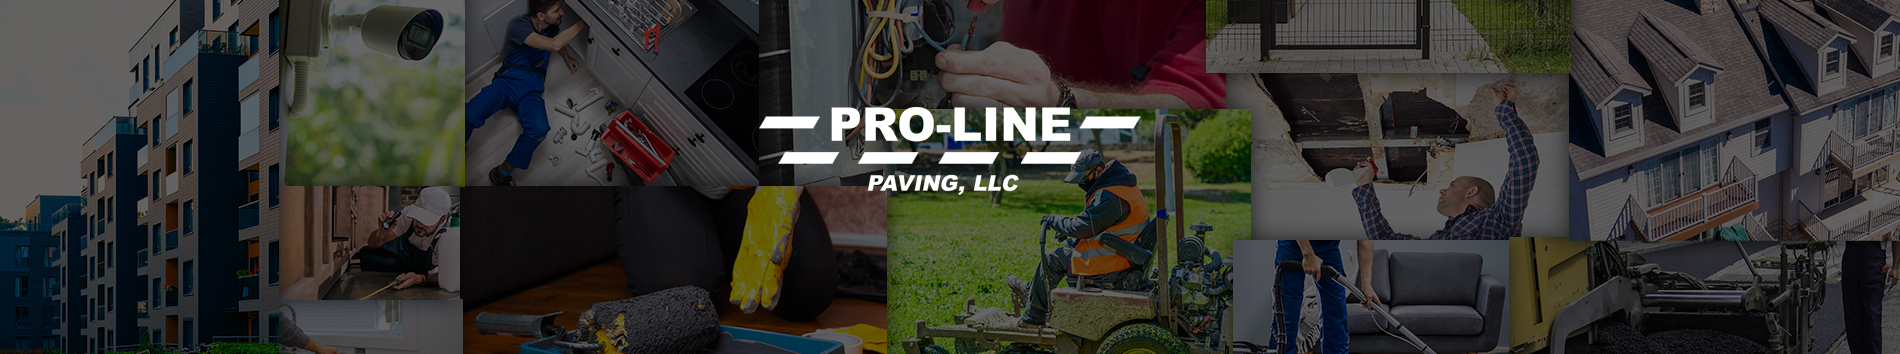 Pro-Line Paving, LLC